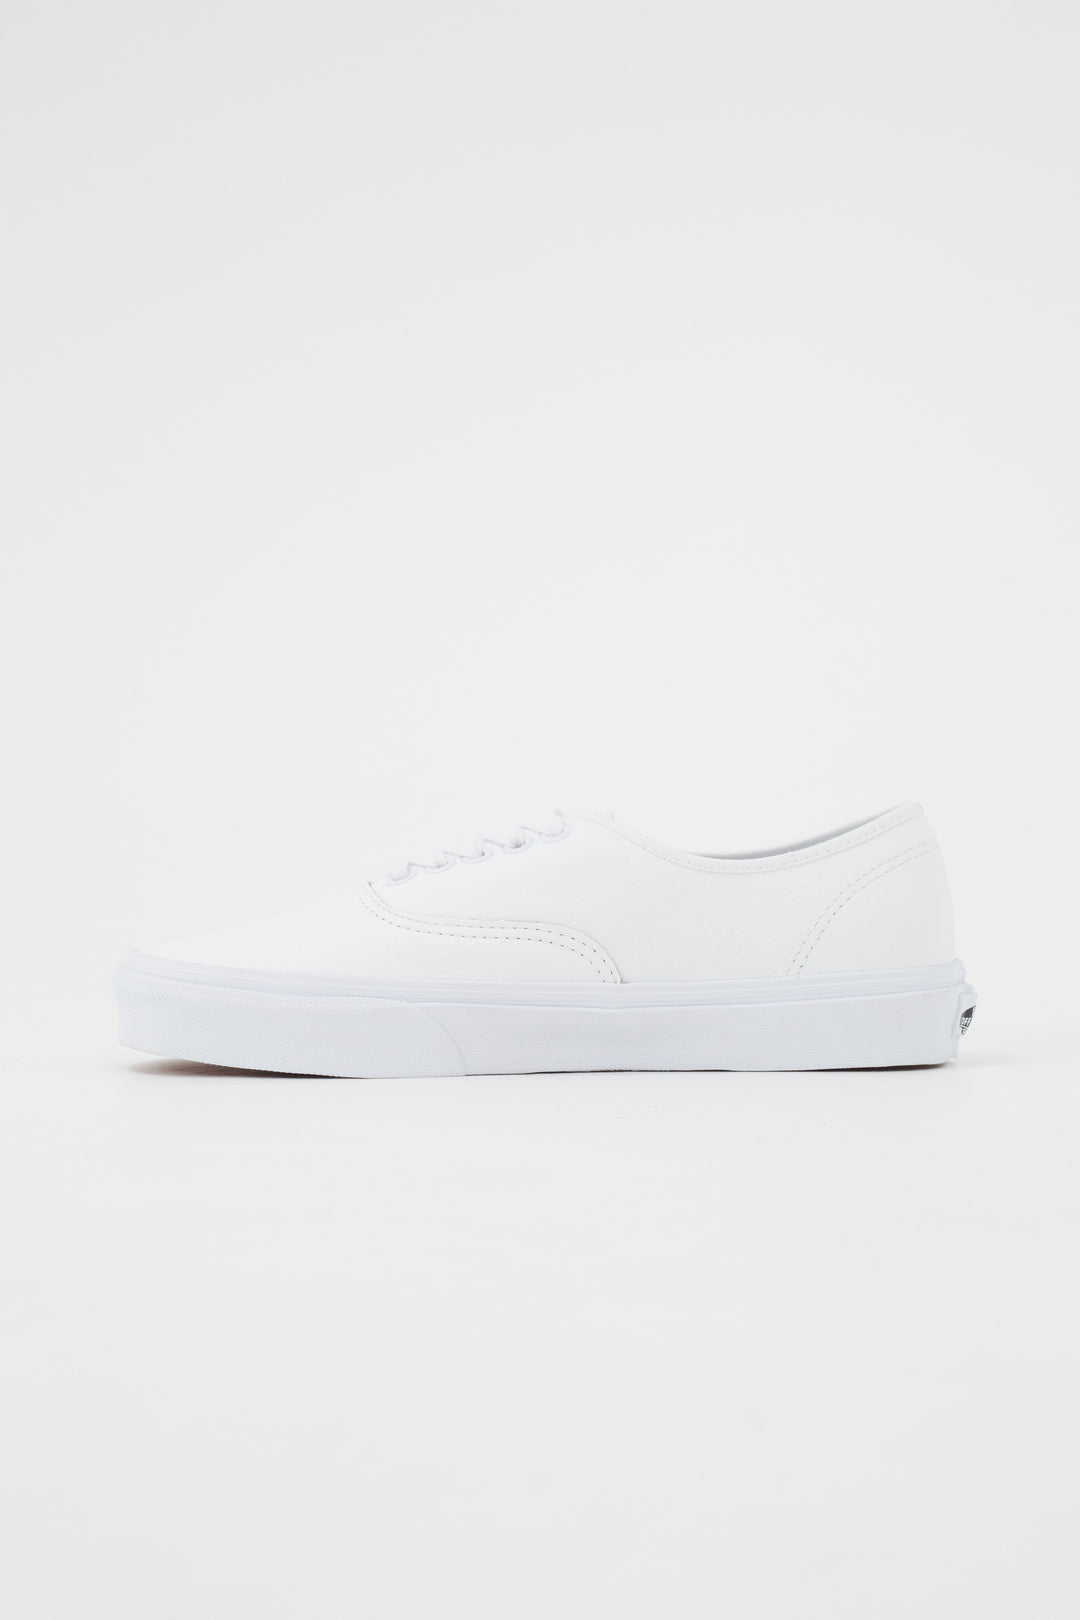 Vans White Authentic Sneakers